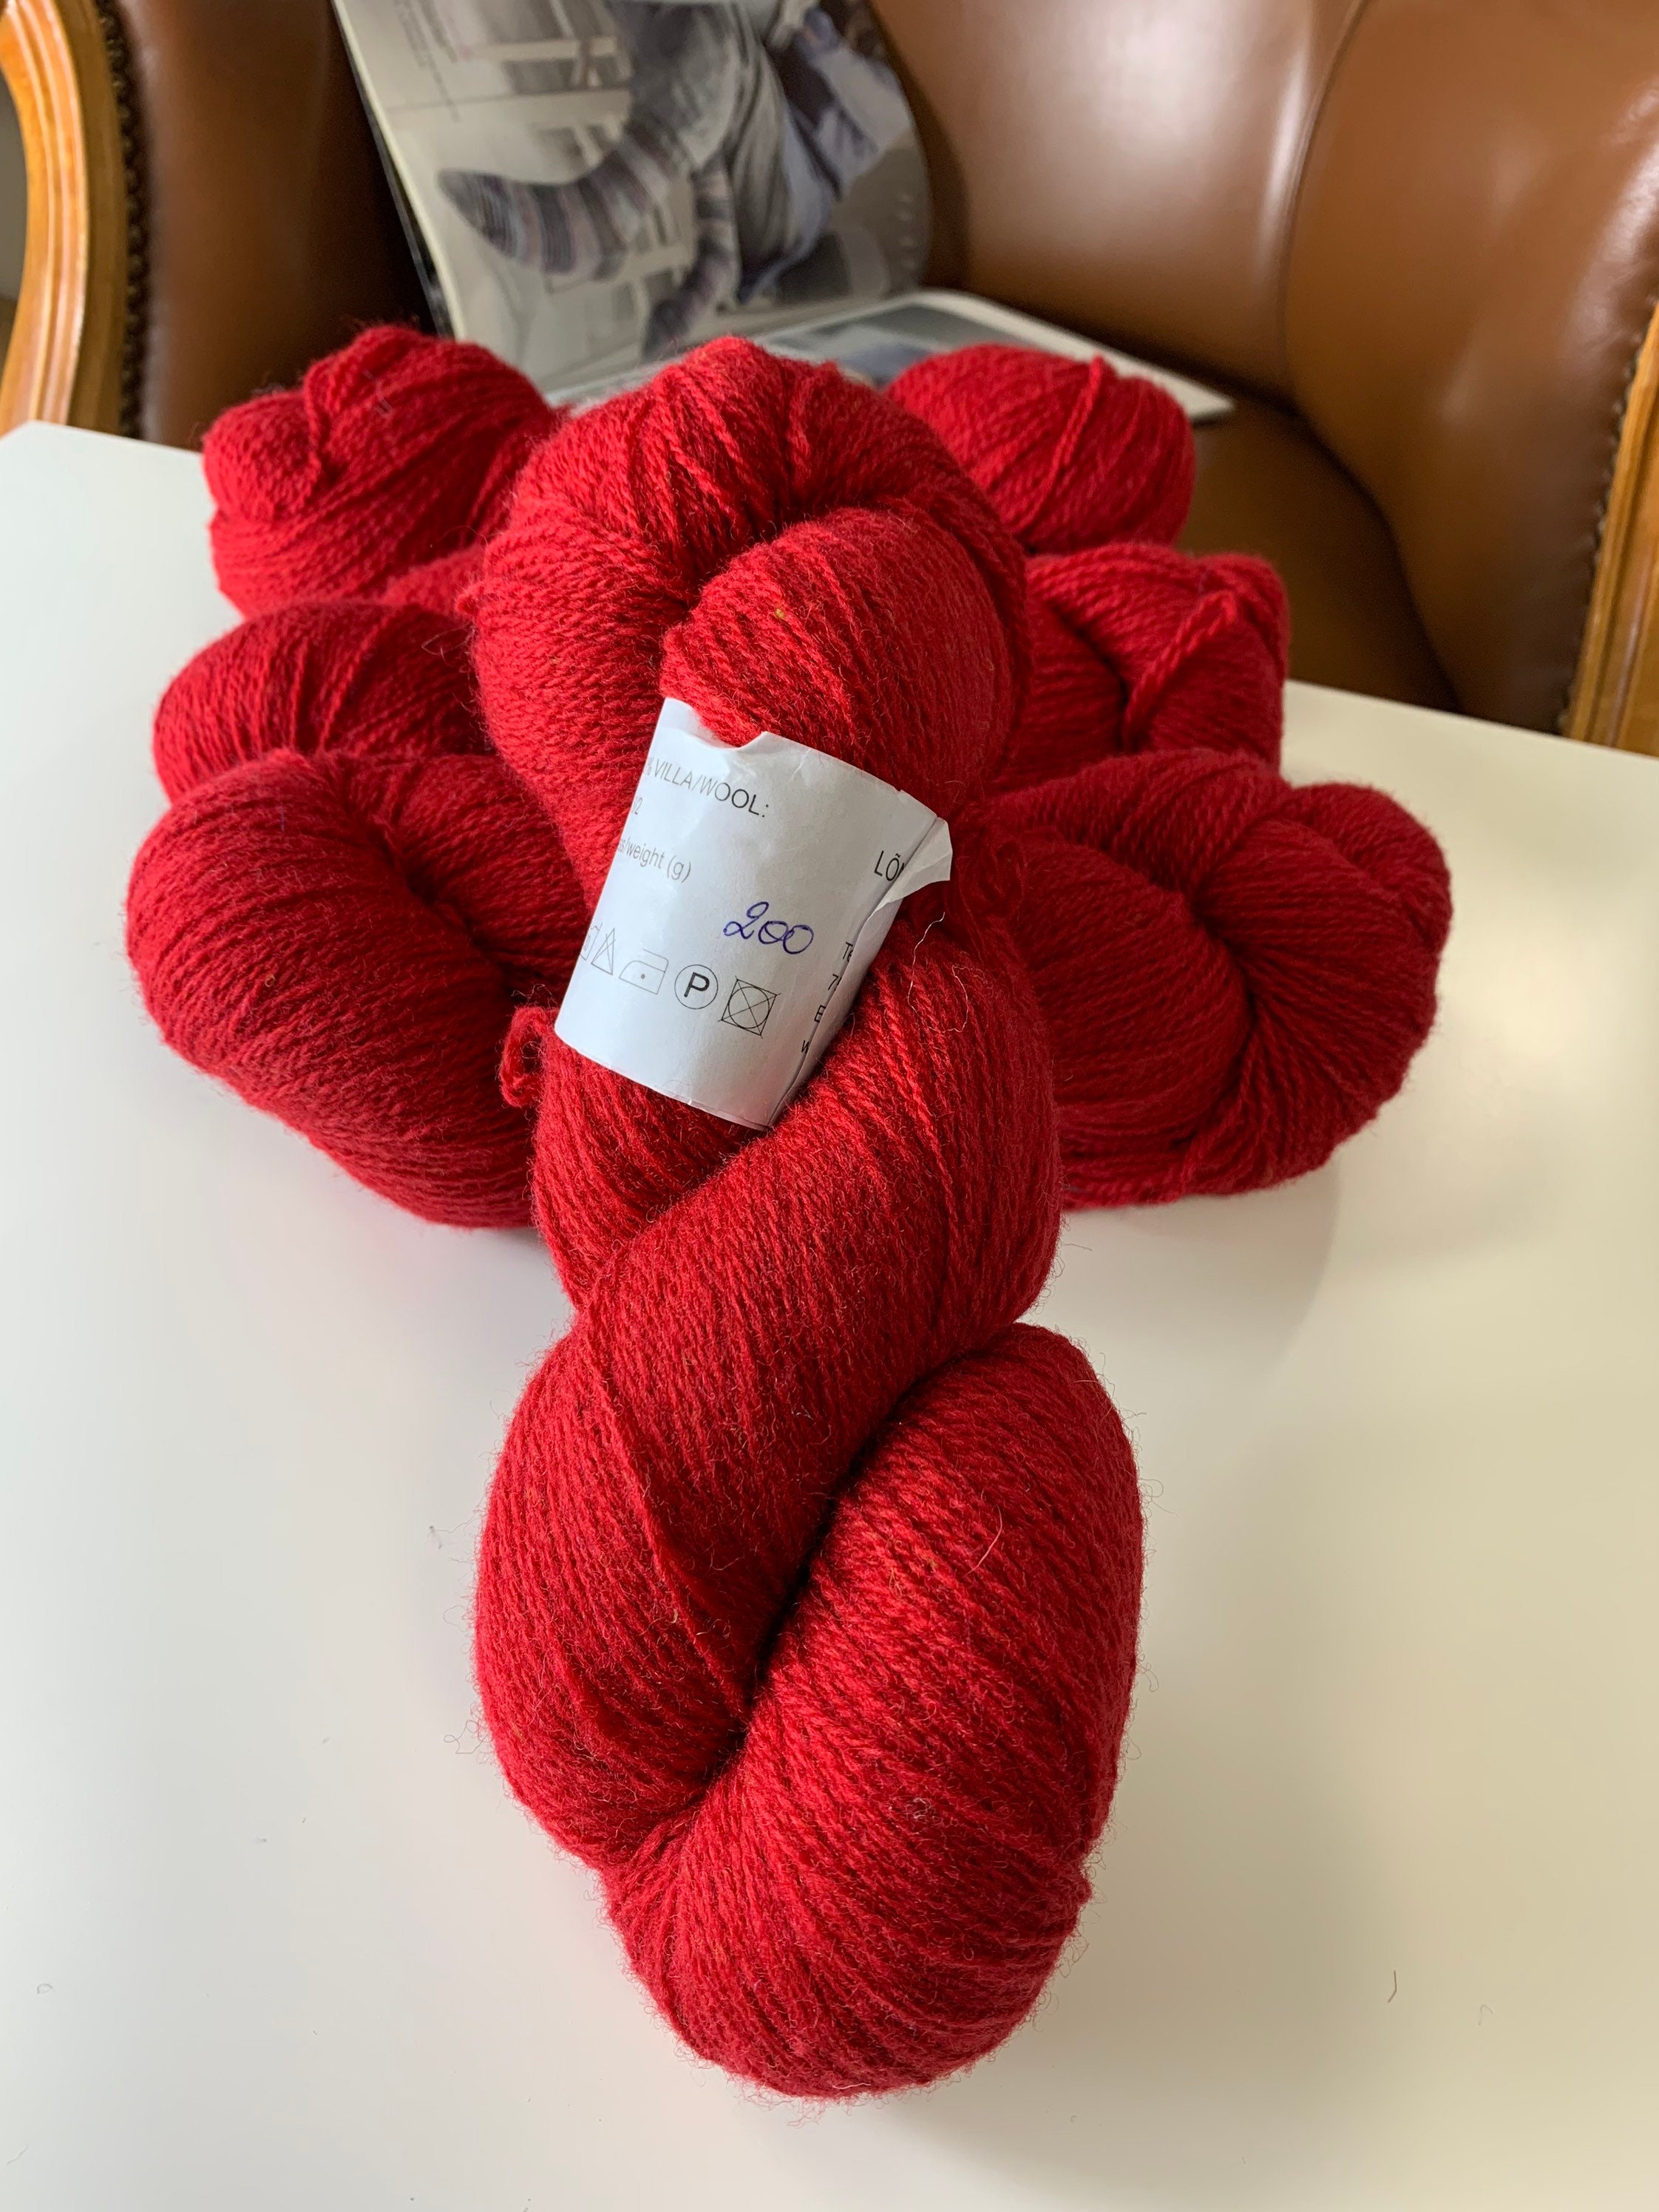 Natural Wool Yarn,100% Sheep Wool Yarn Lot, Hand & Machine Knitting Malange Red  Yarn,wool Yarn for Crocheting Weaving, 8/2 Double Wool Wrap 